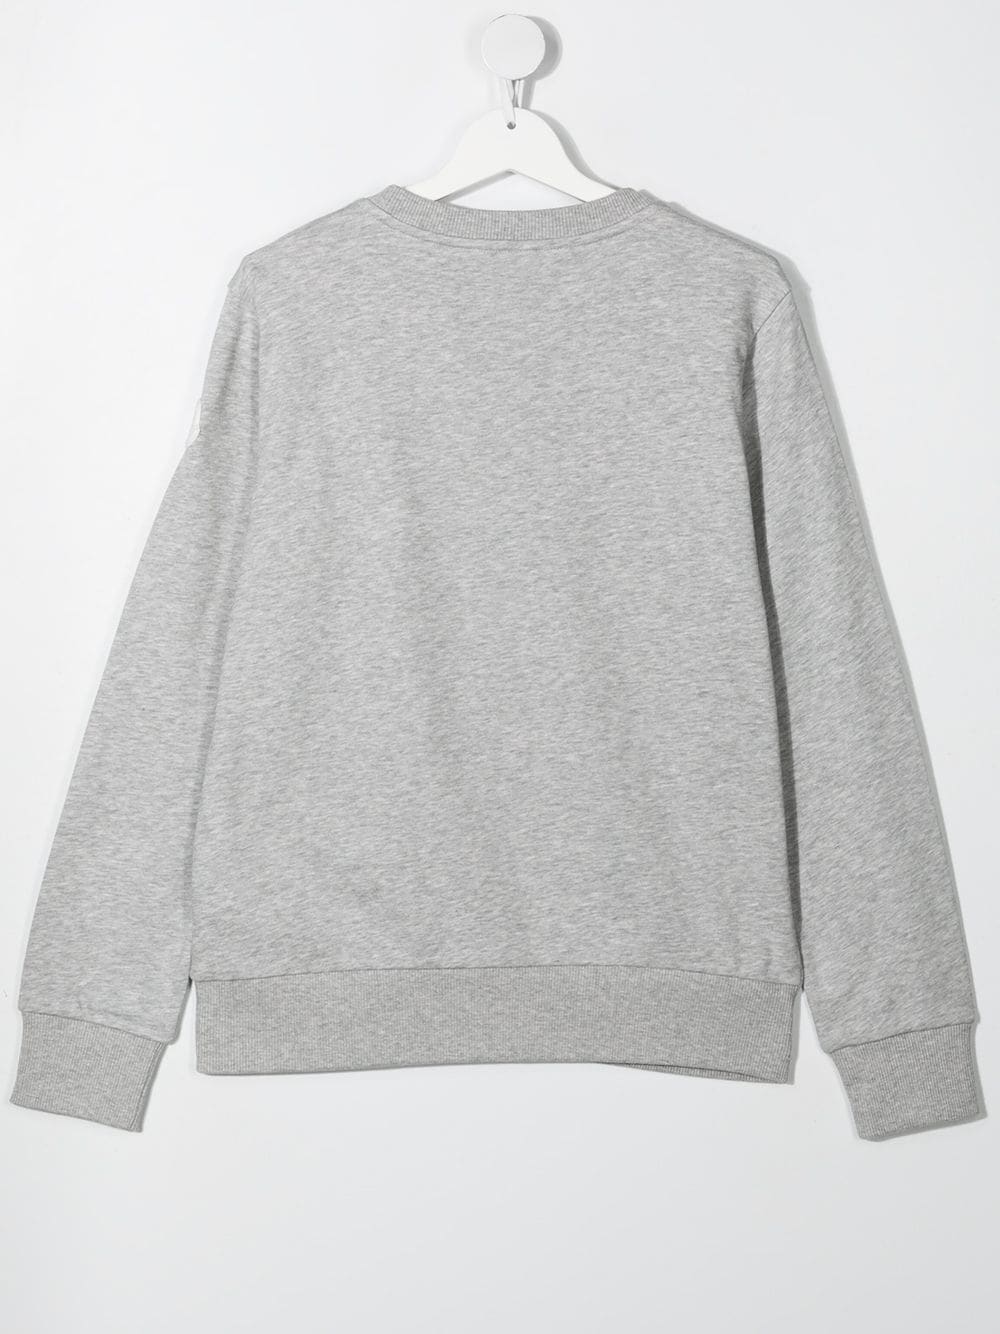 Boys Grey Cotton Sweatshirt